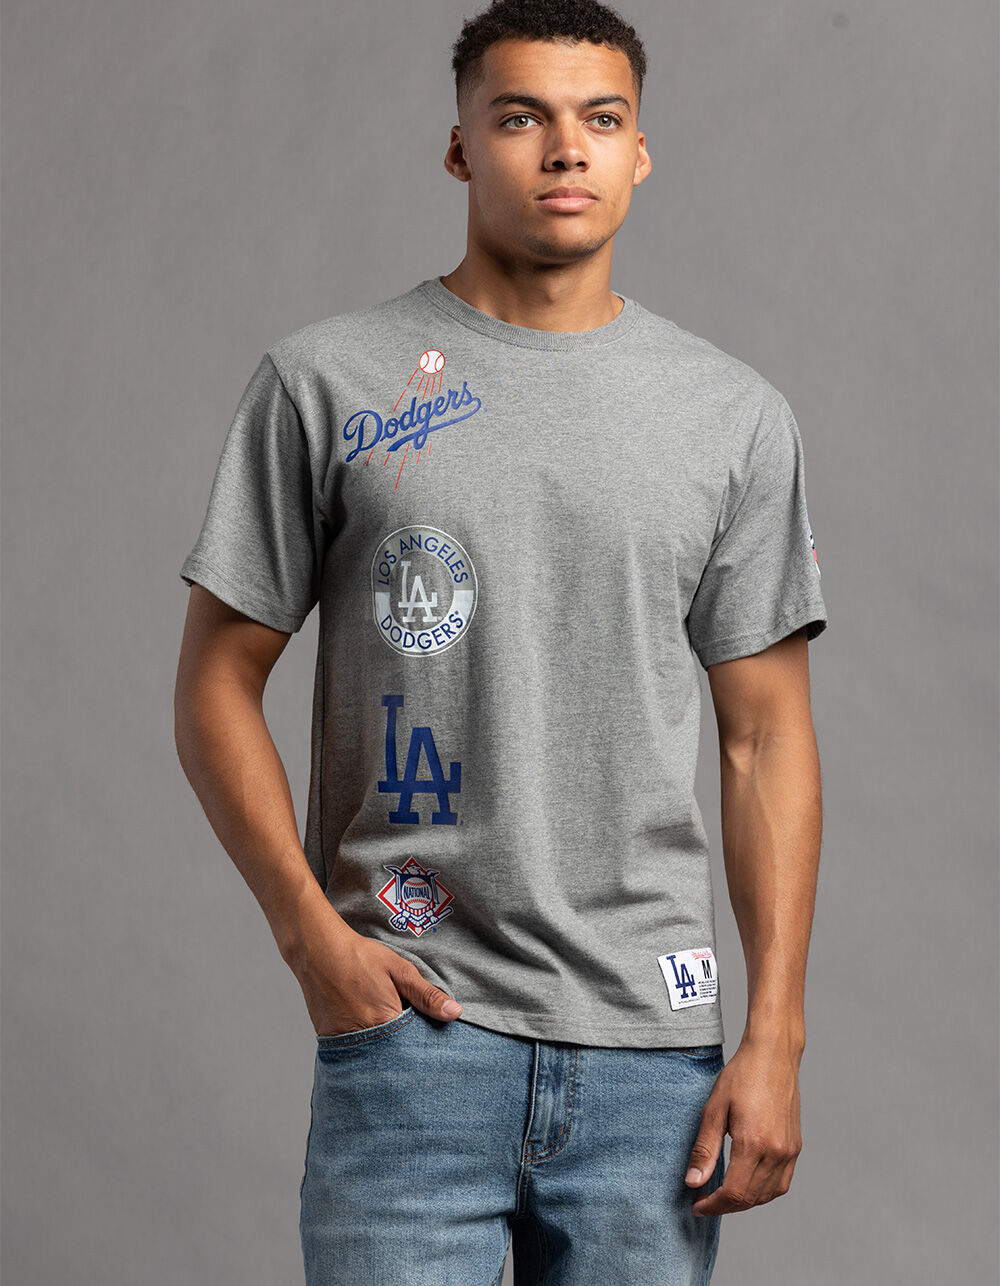 47 Boston Red Sox MLB Brand Slate Grey Knockaround Club Tee Gray T Shirt  Adult Men's